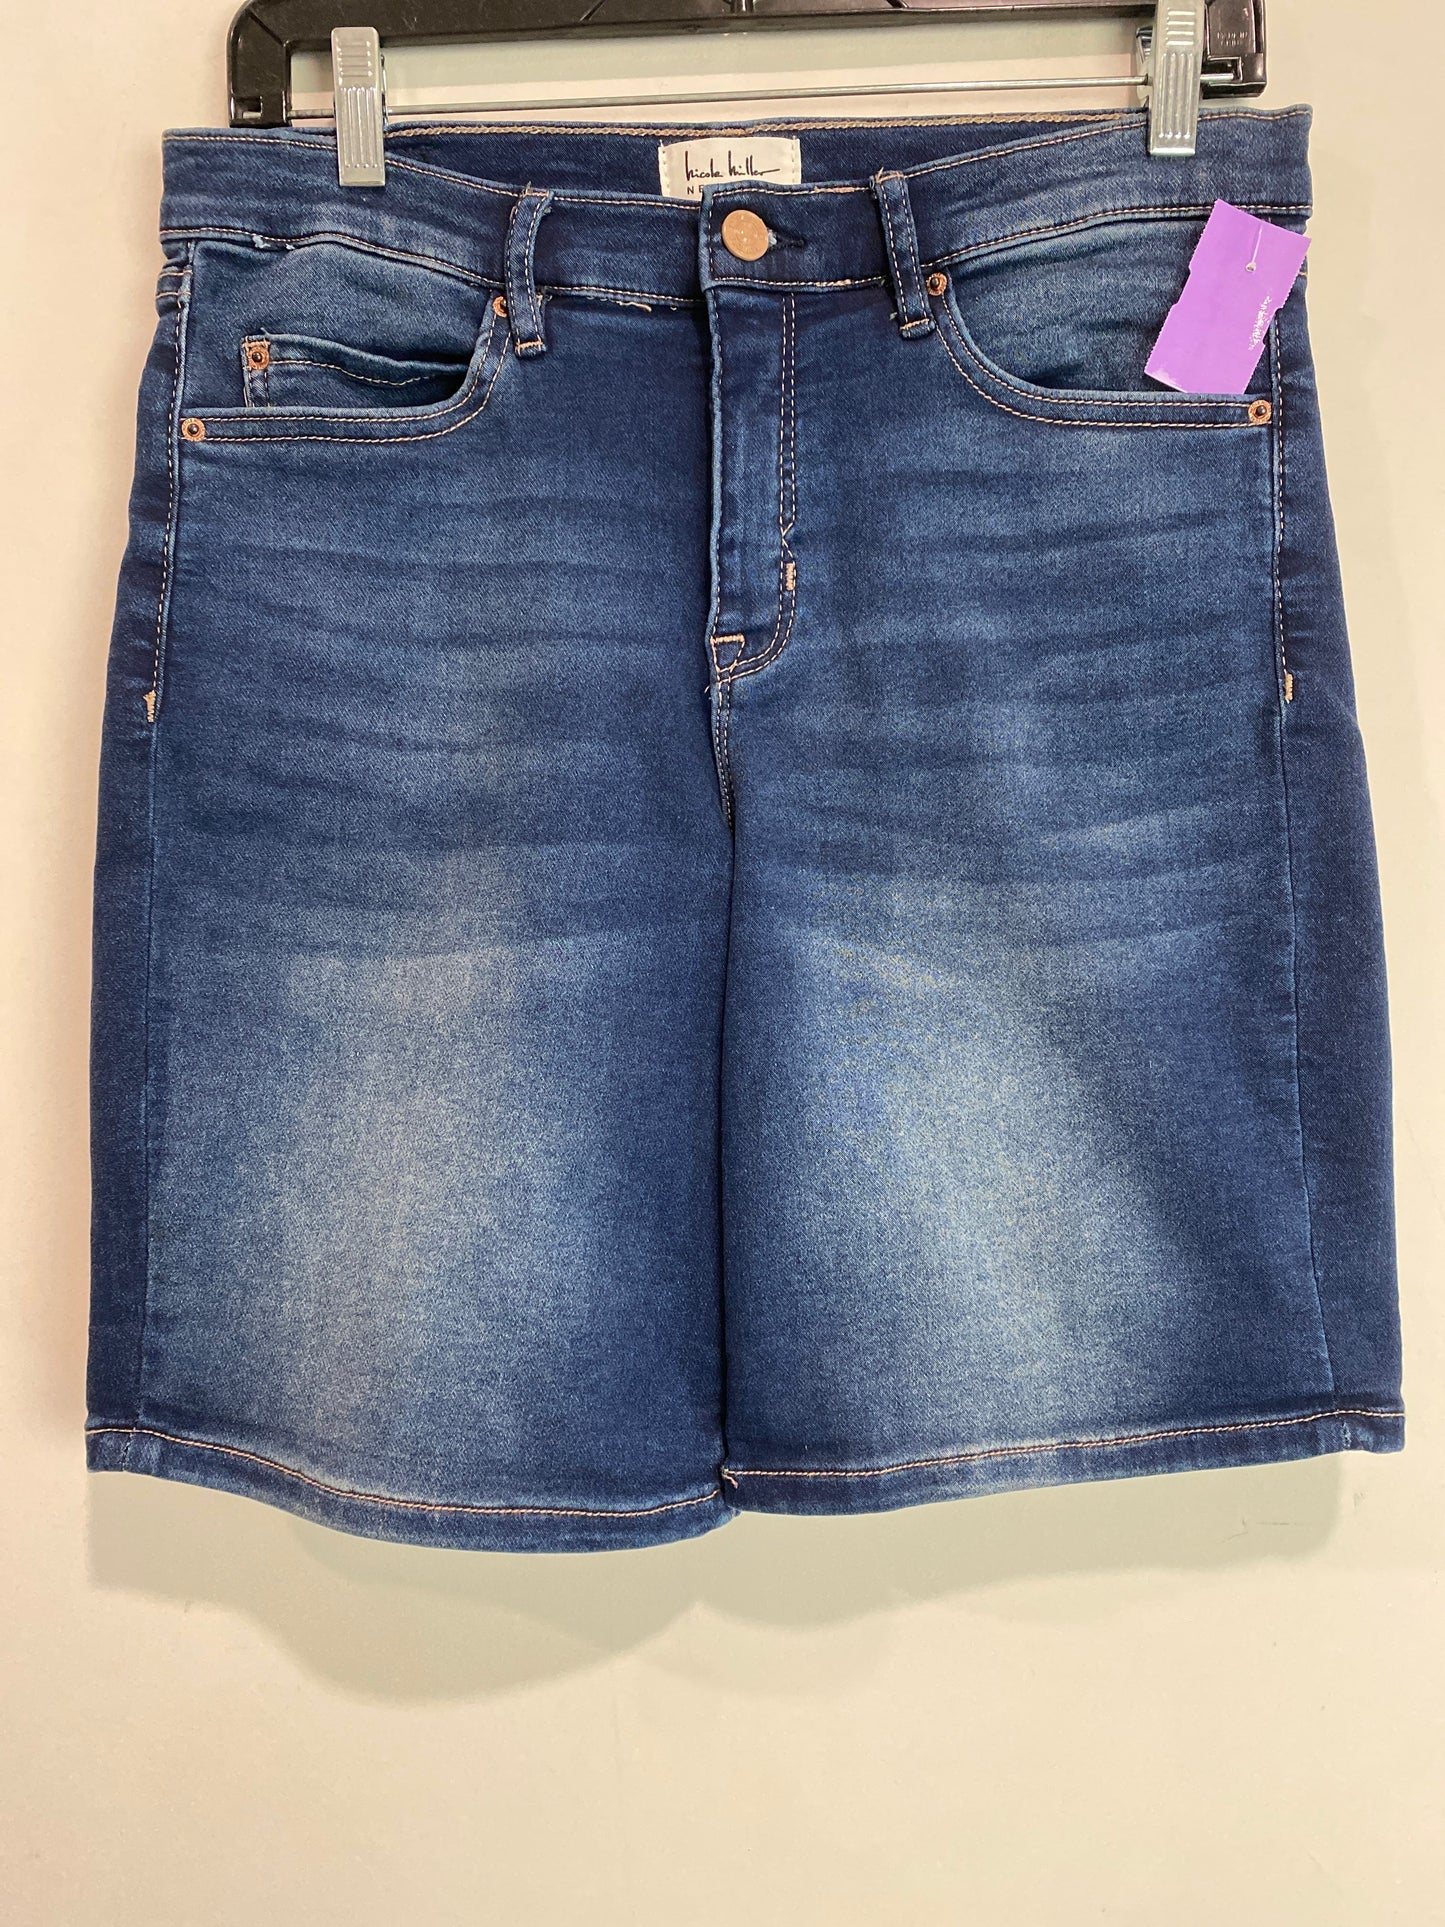 Blue Denim Shorts Nicole By Nicole Miller, Size 8